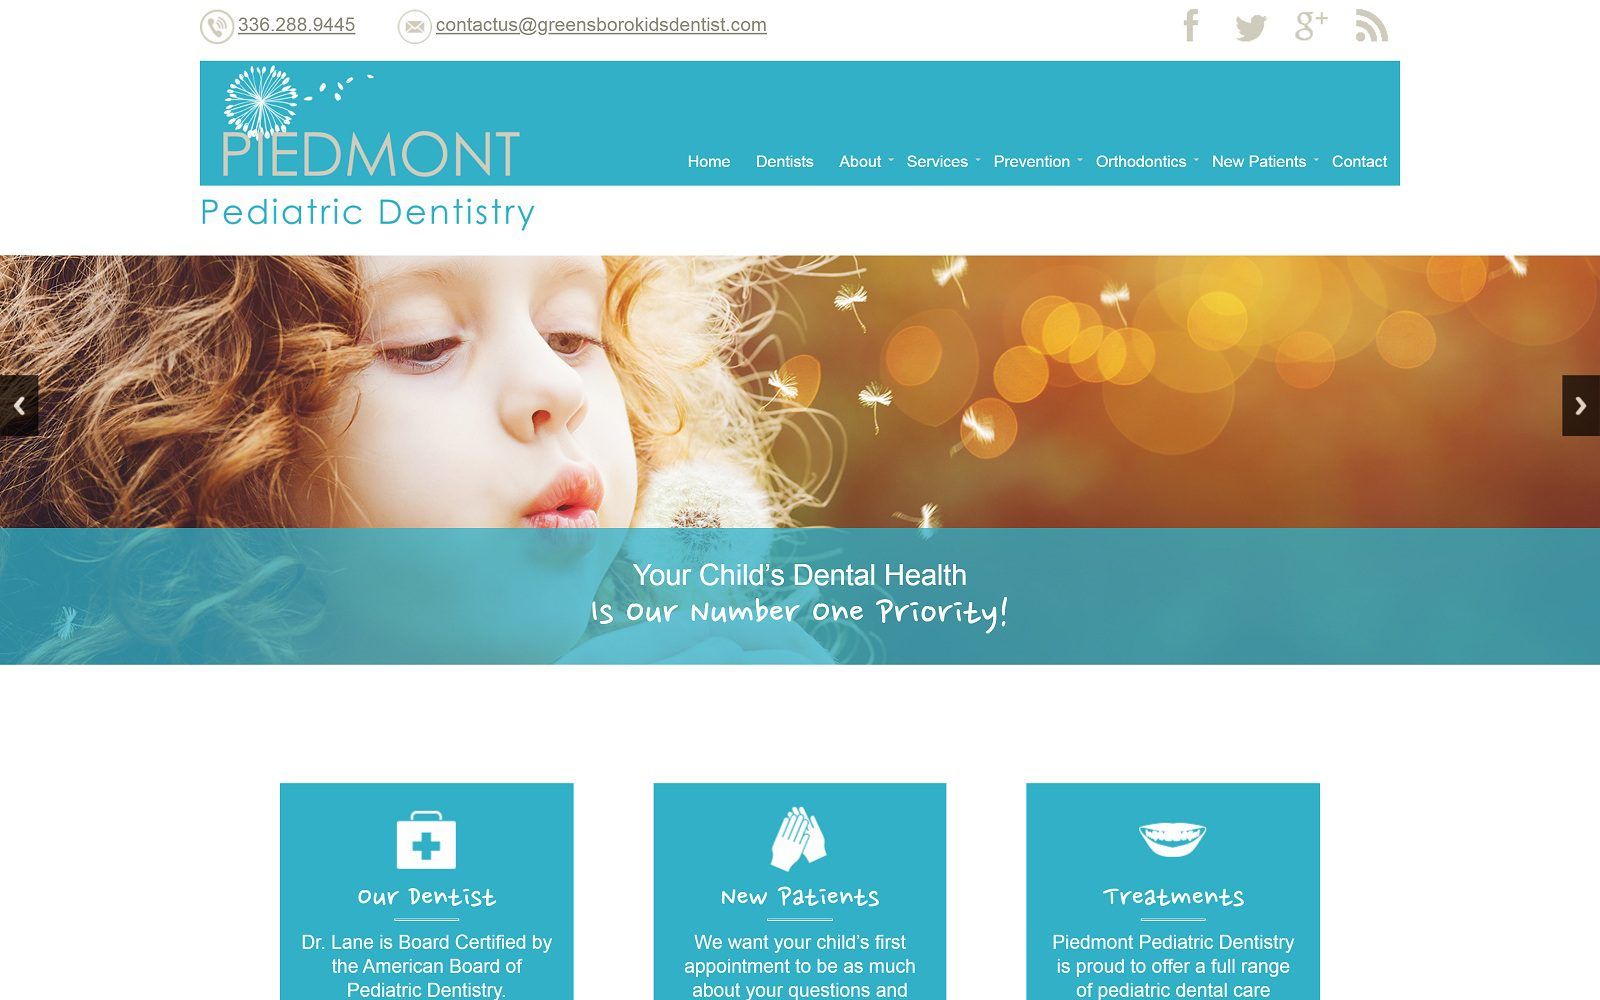 The screenshot of piedmont pediatric dentistry website